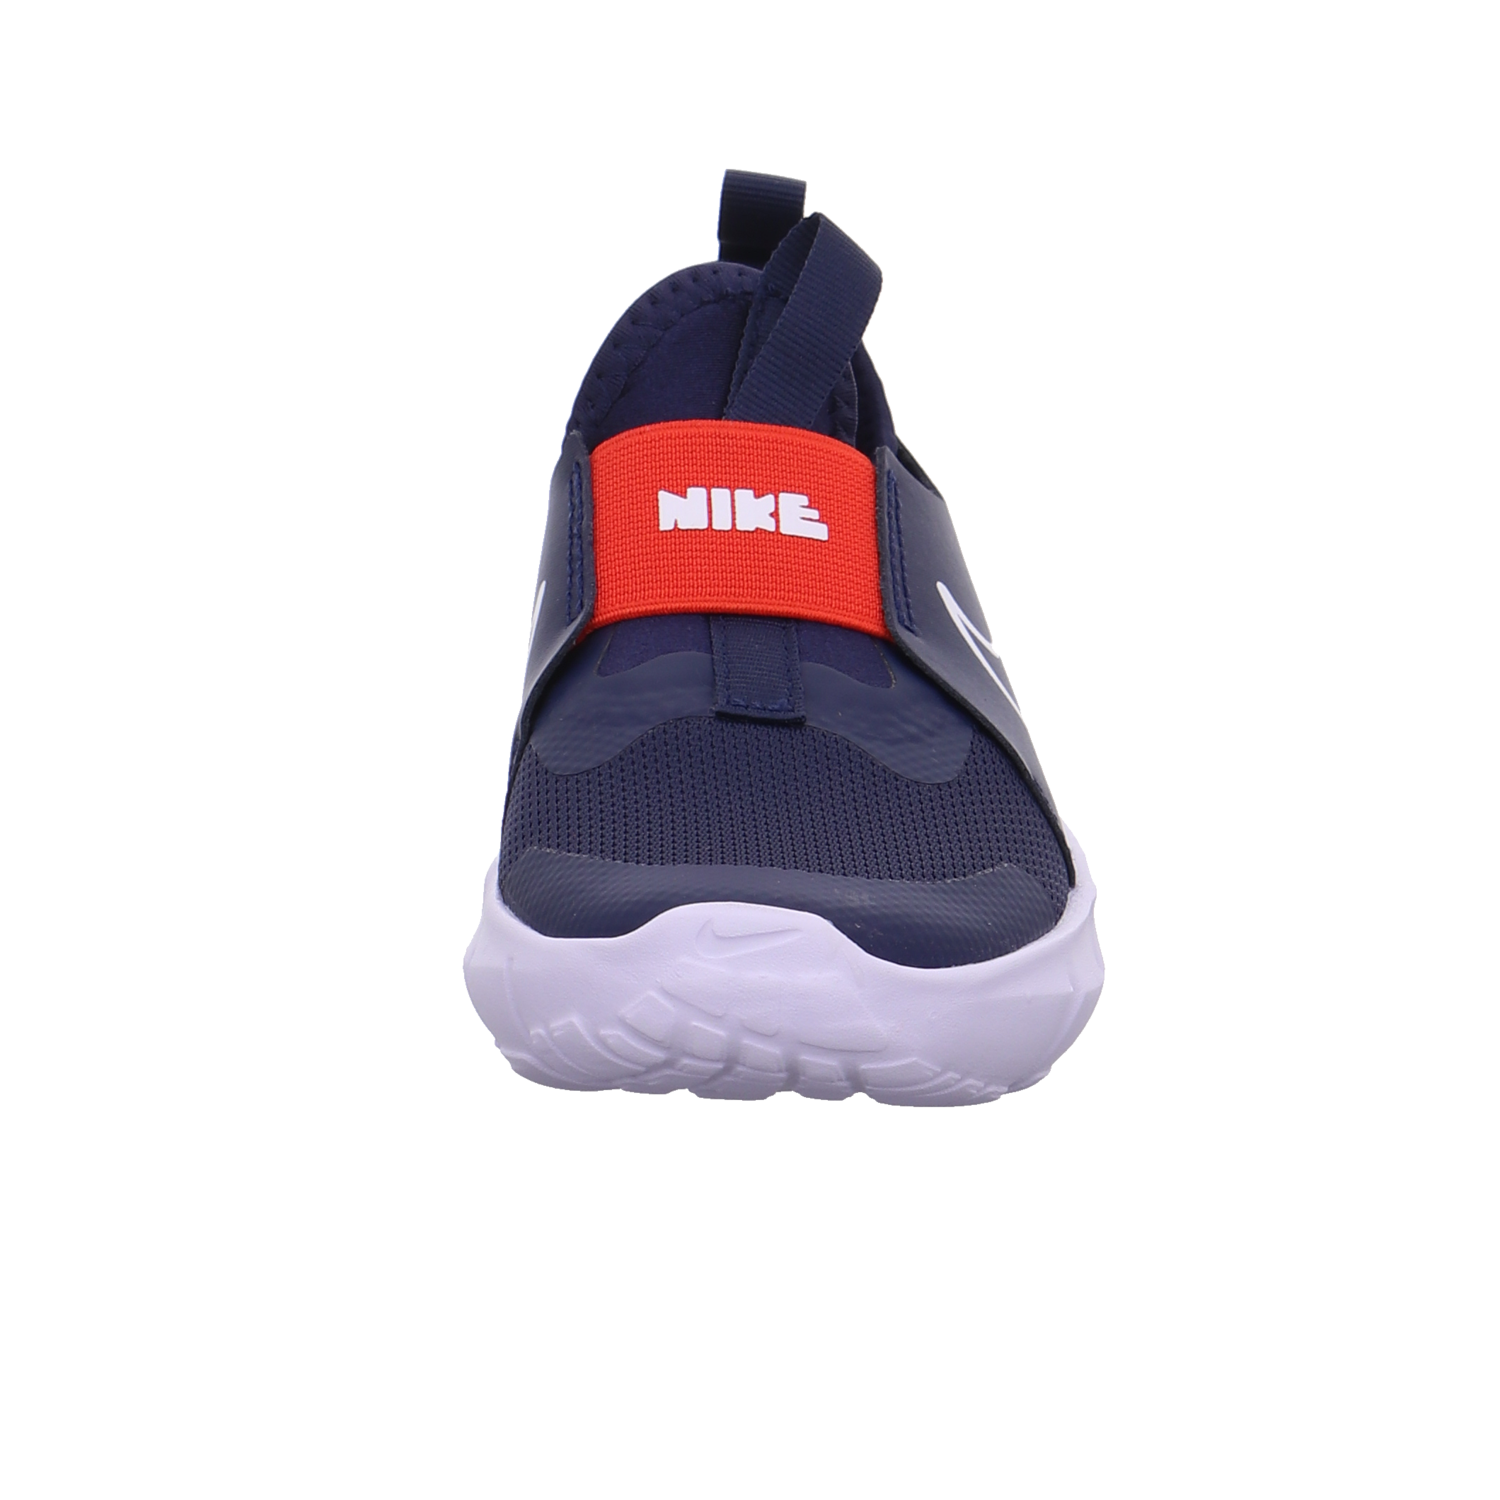 Nike Nike Flex Runner 2 Little Kids blau kombi Bild3